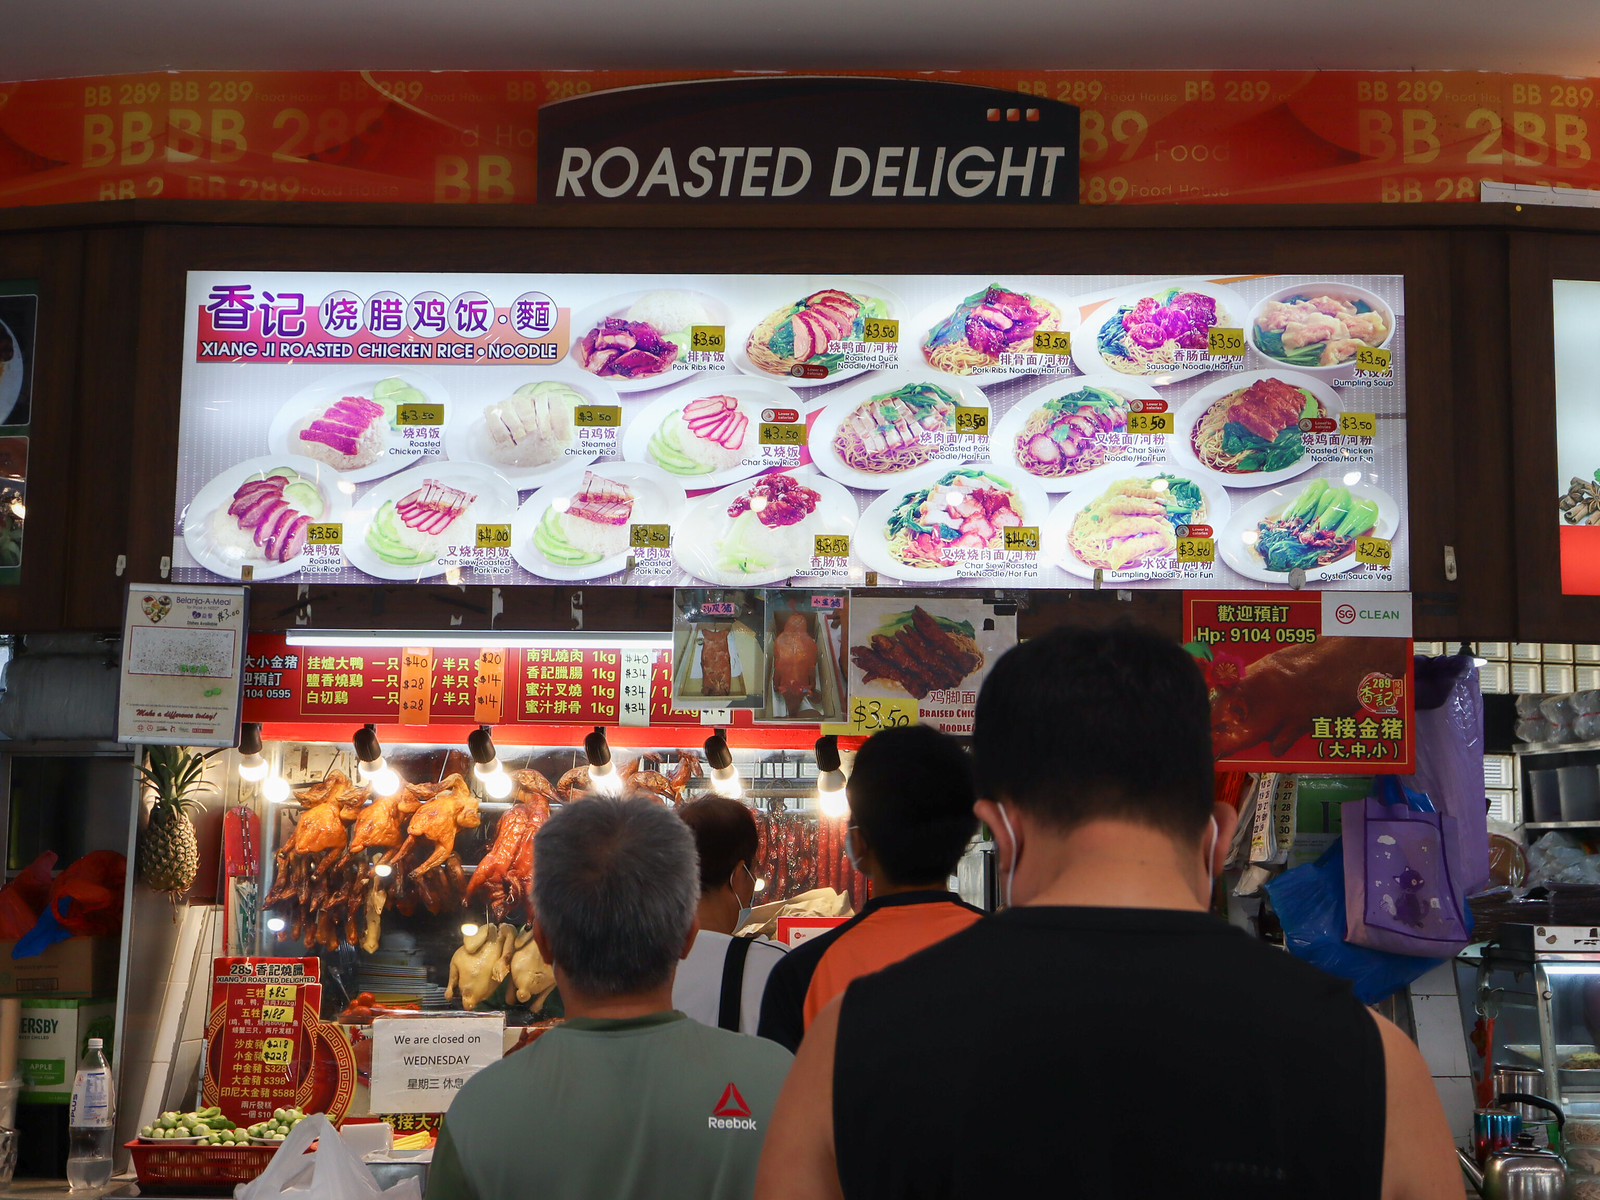 xiang ji roast chicken rice & noodles - storefront